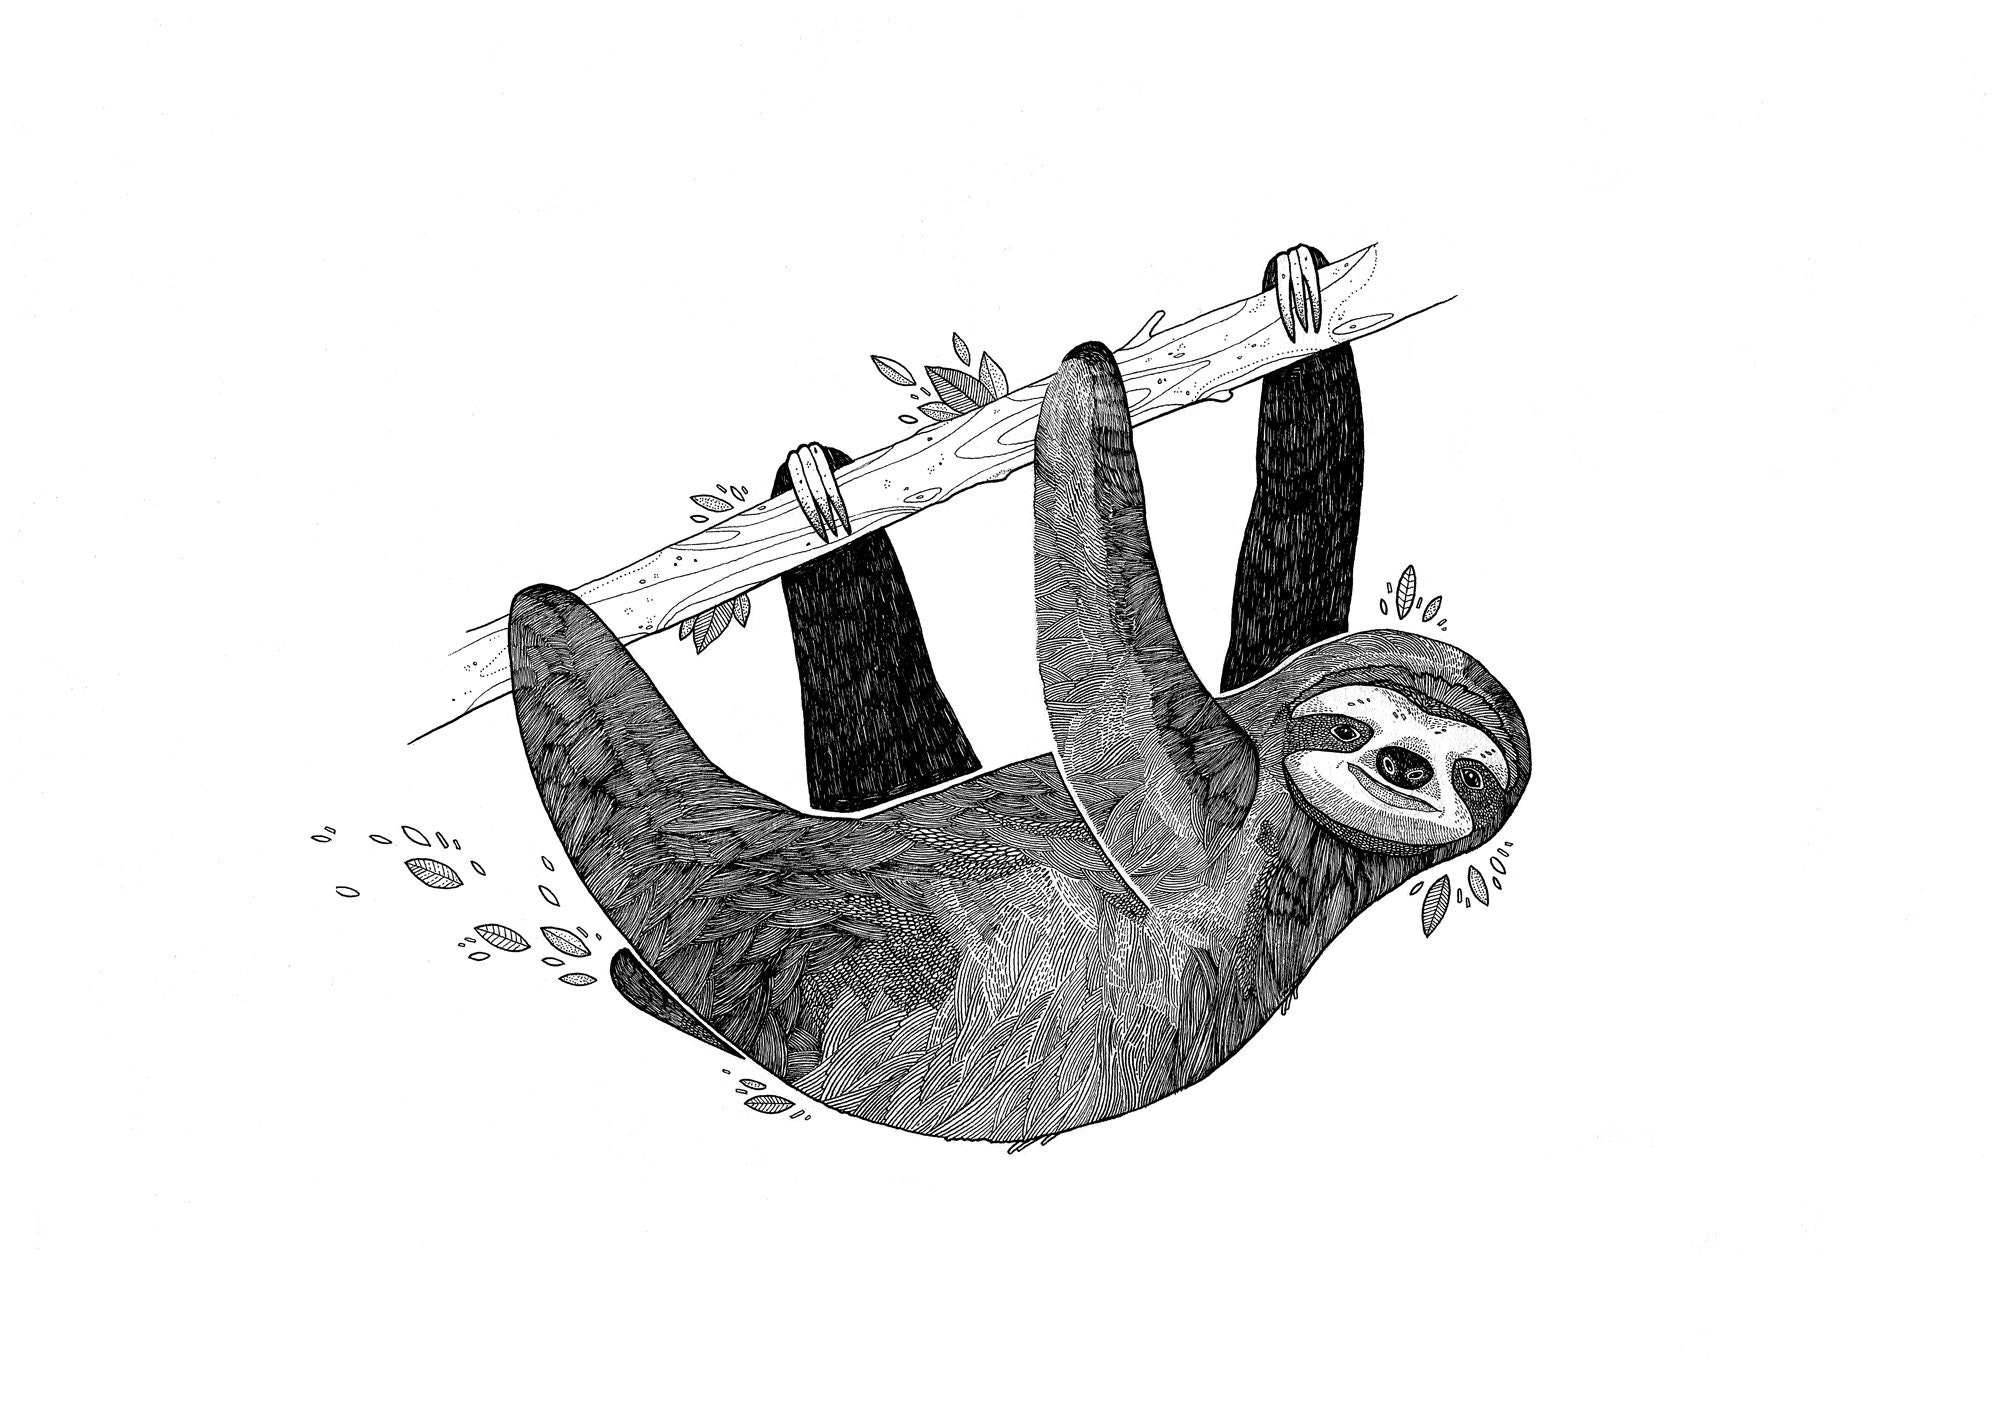 Don't worry, don't hurry 🦥 #sloth #sloths #slothtattoo #slothart  #customtattoo #tattooart #blackwork #blackworkartists #tattoo #inkwork…